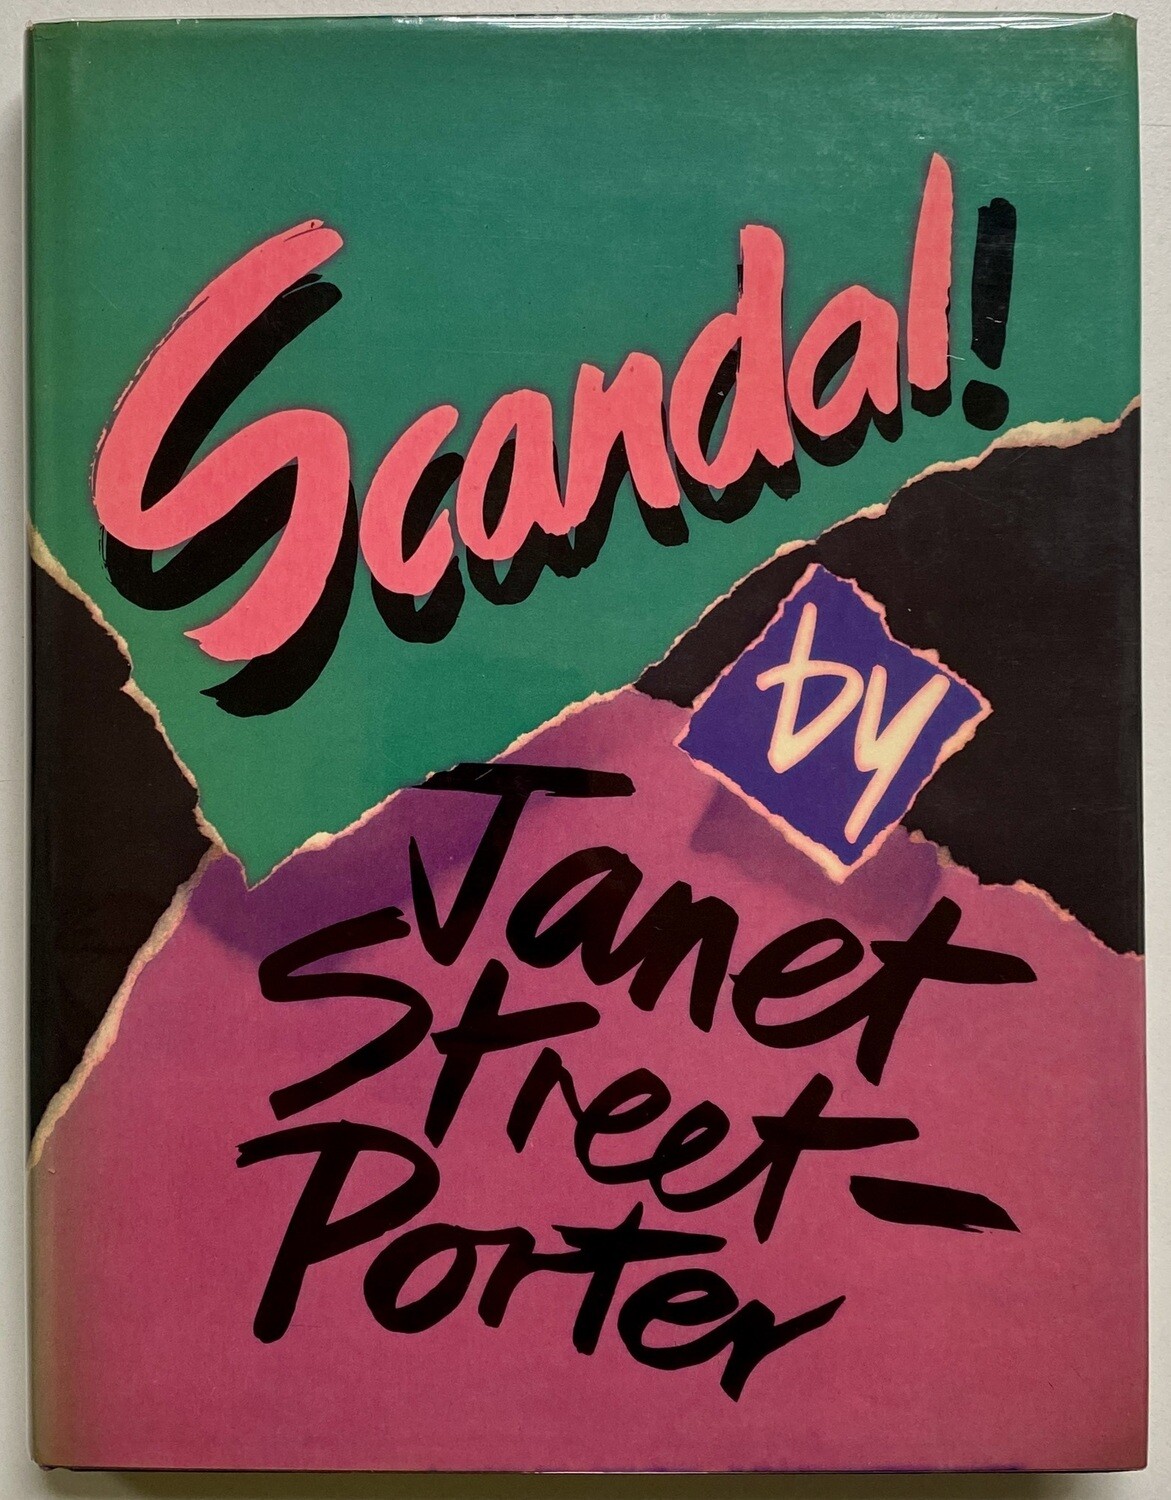 Scandal! by Janet Street-Porter